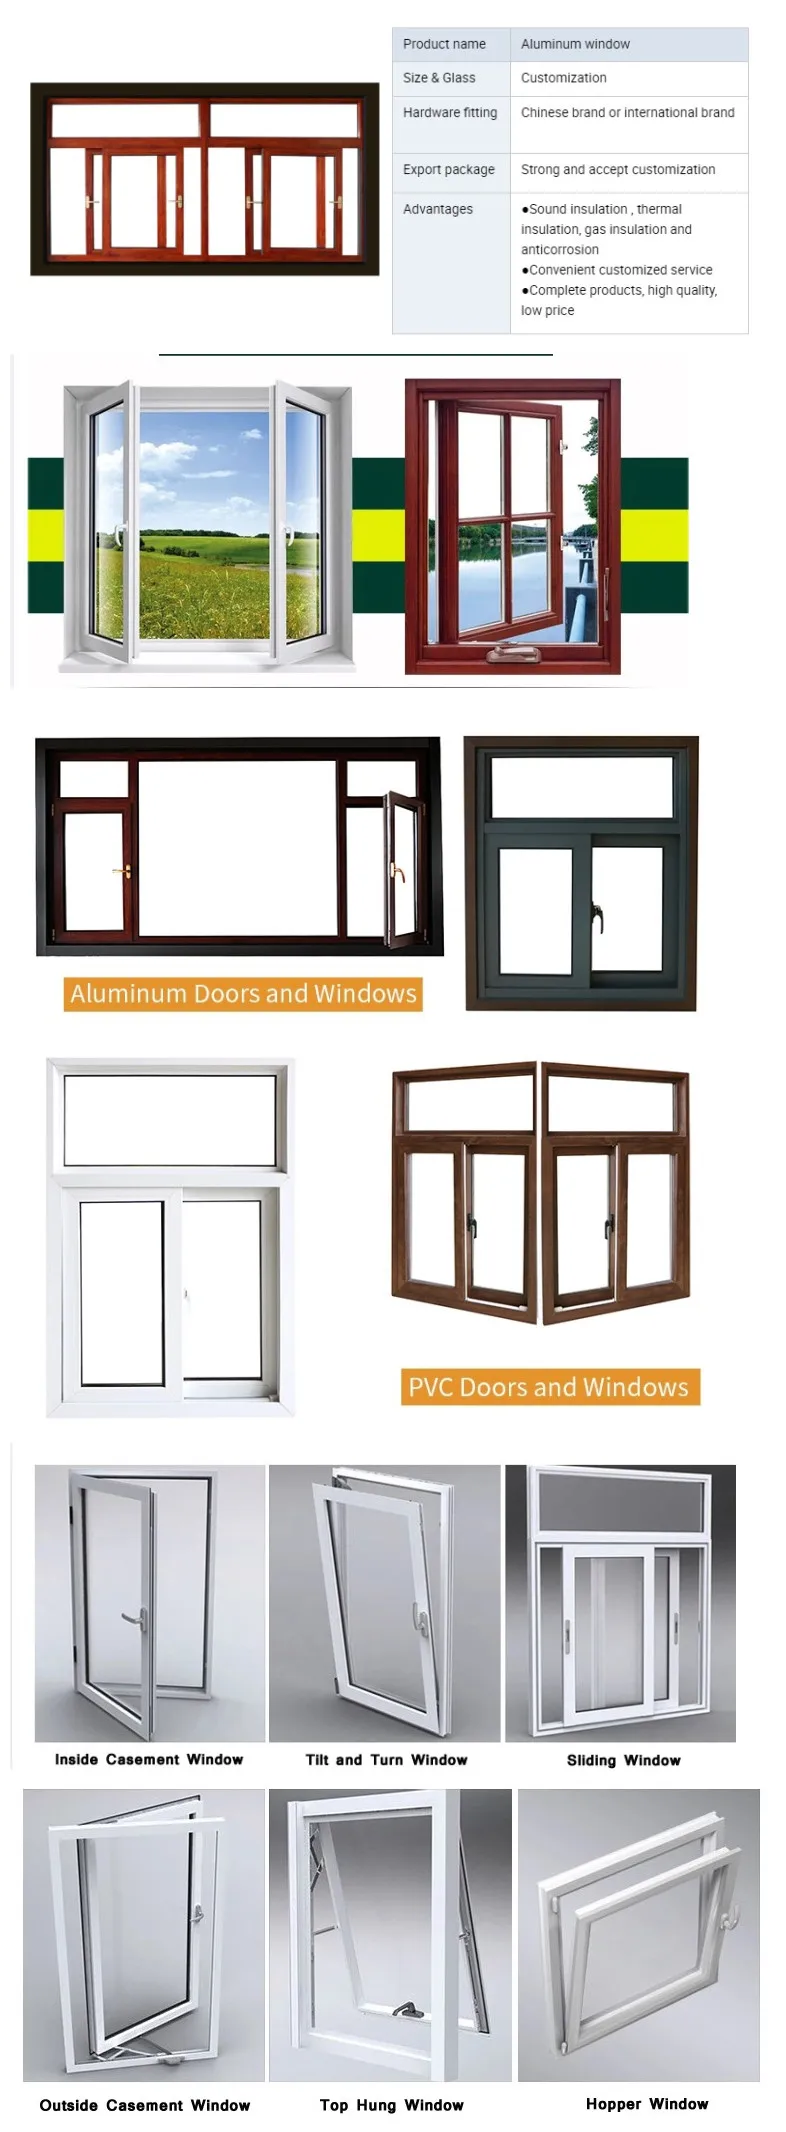 Aluminium alloy Profile American Standard doors and Windows with screen